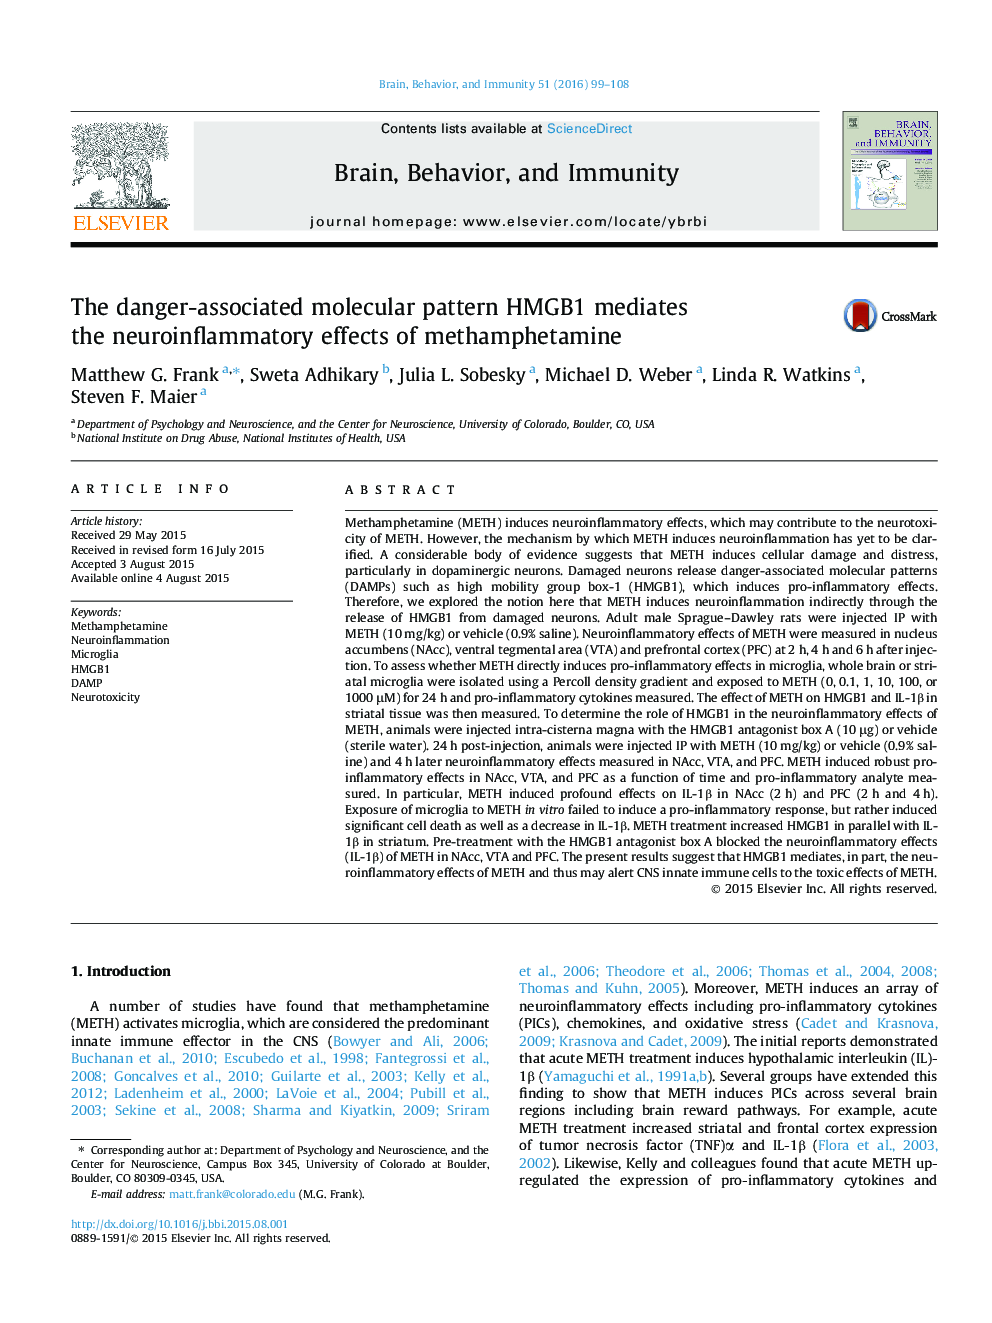 The danger-associated molecular pattern HMGB1 mediates the neuroinflammatory effects of methamphetamine